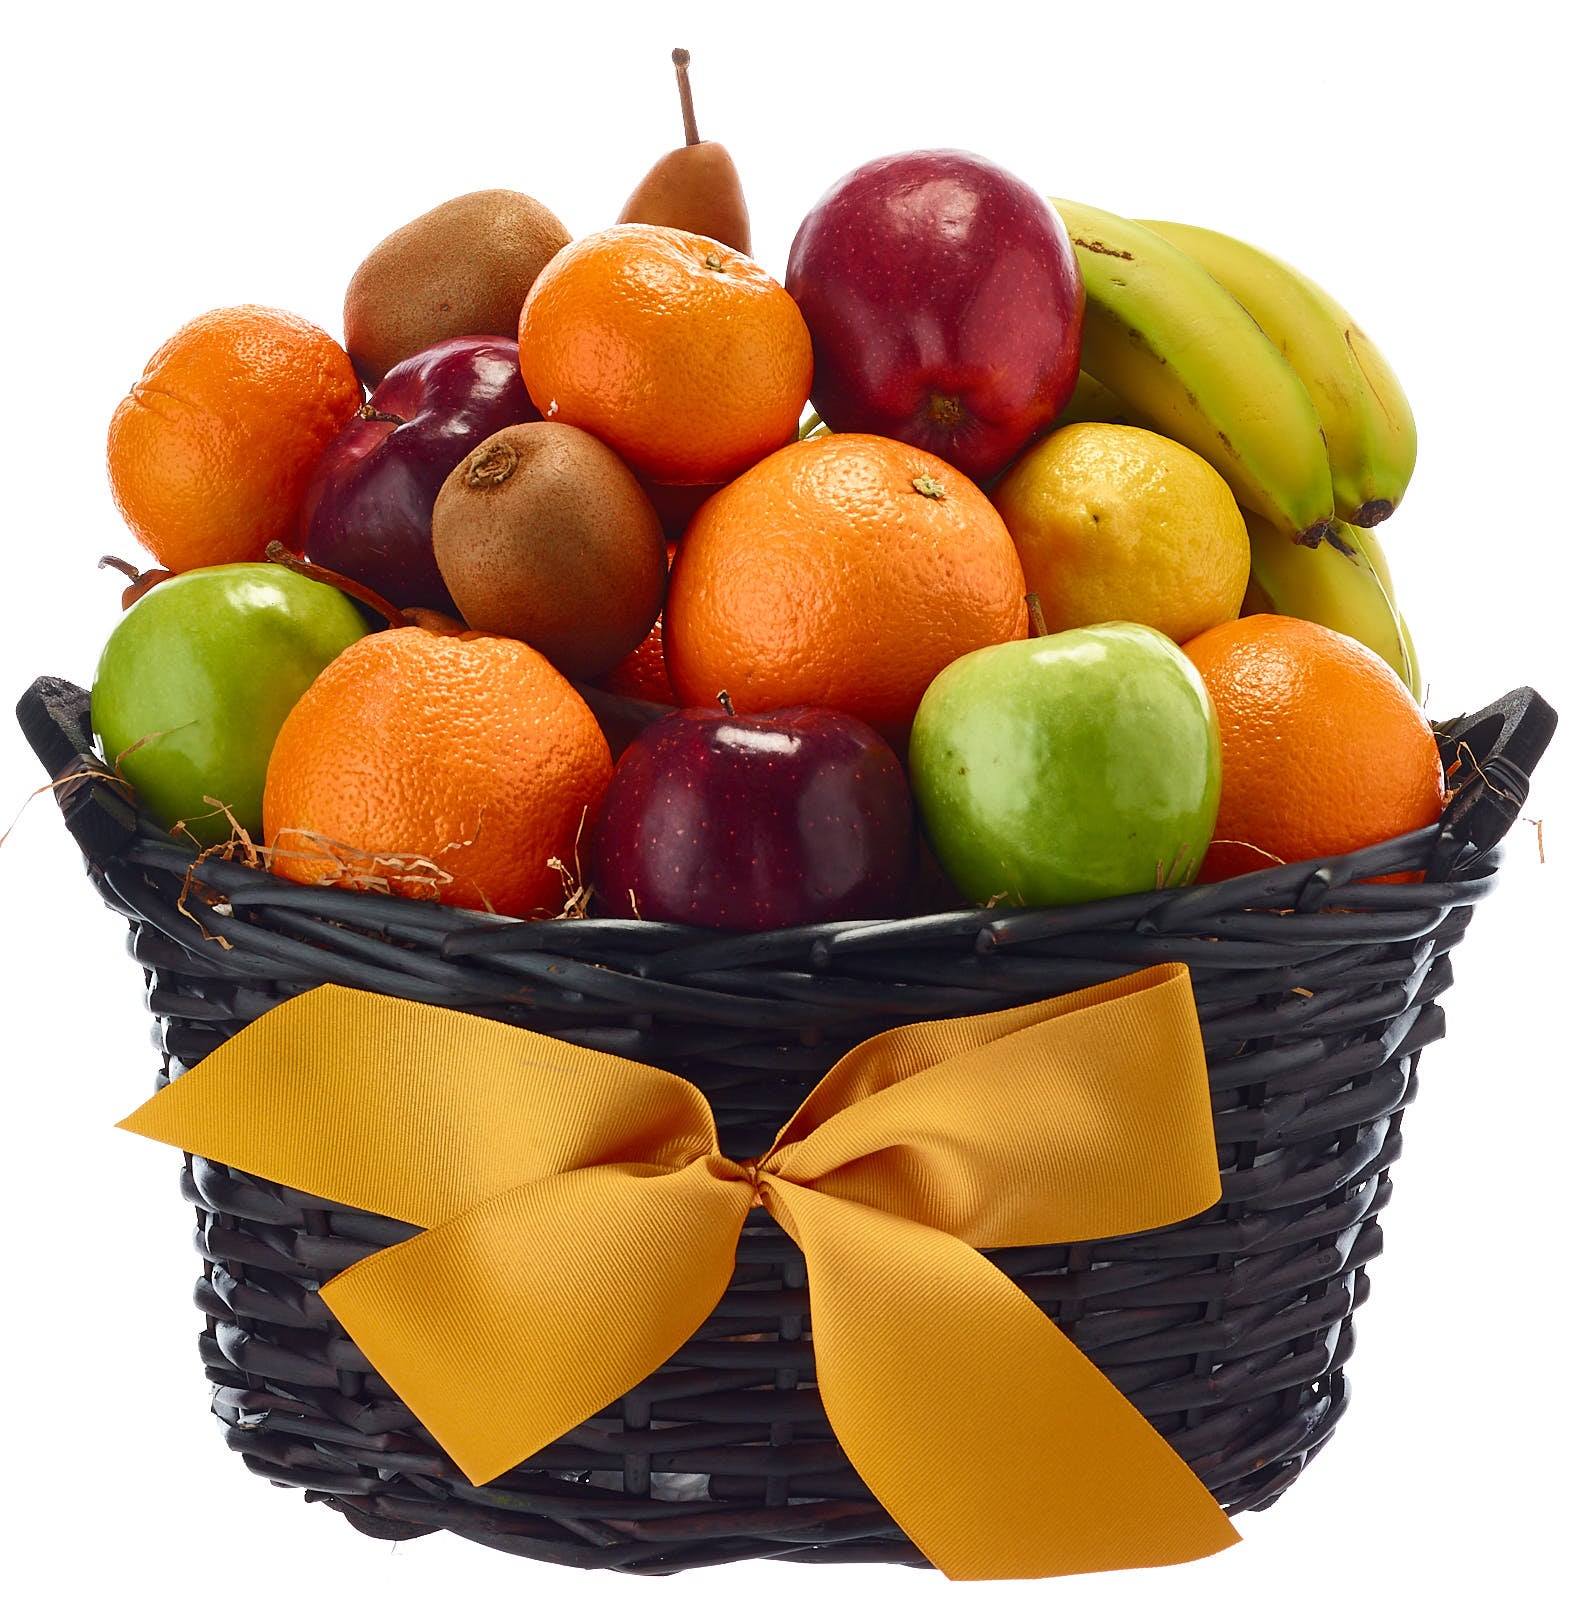 Fresh Fruit Gift Baskets To Brighten Anyone's Day MY BASKETS